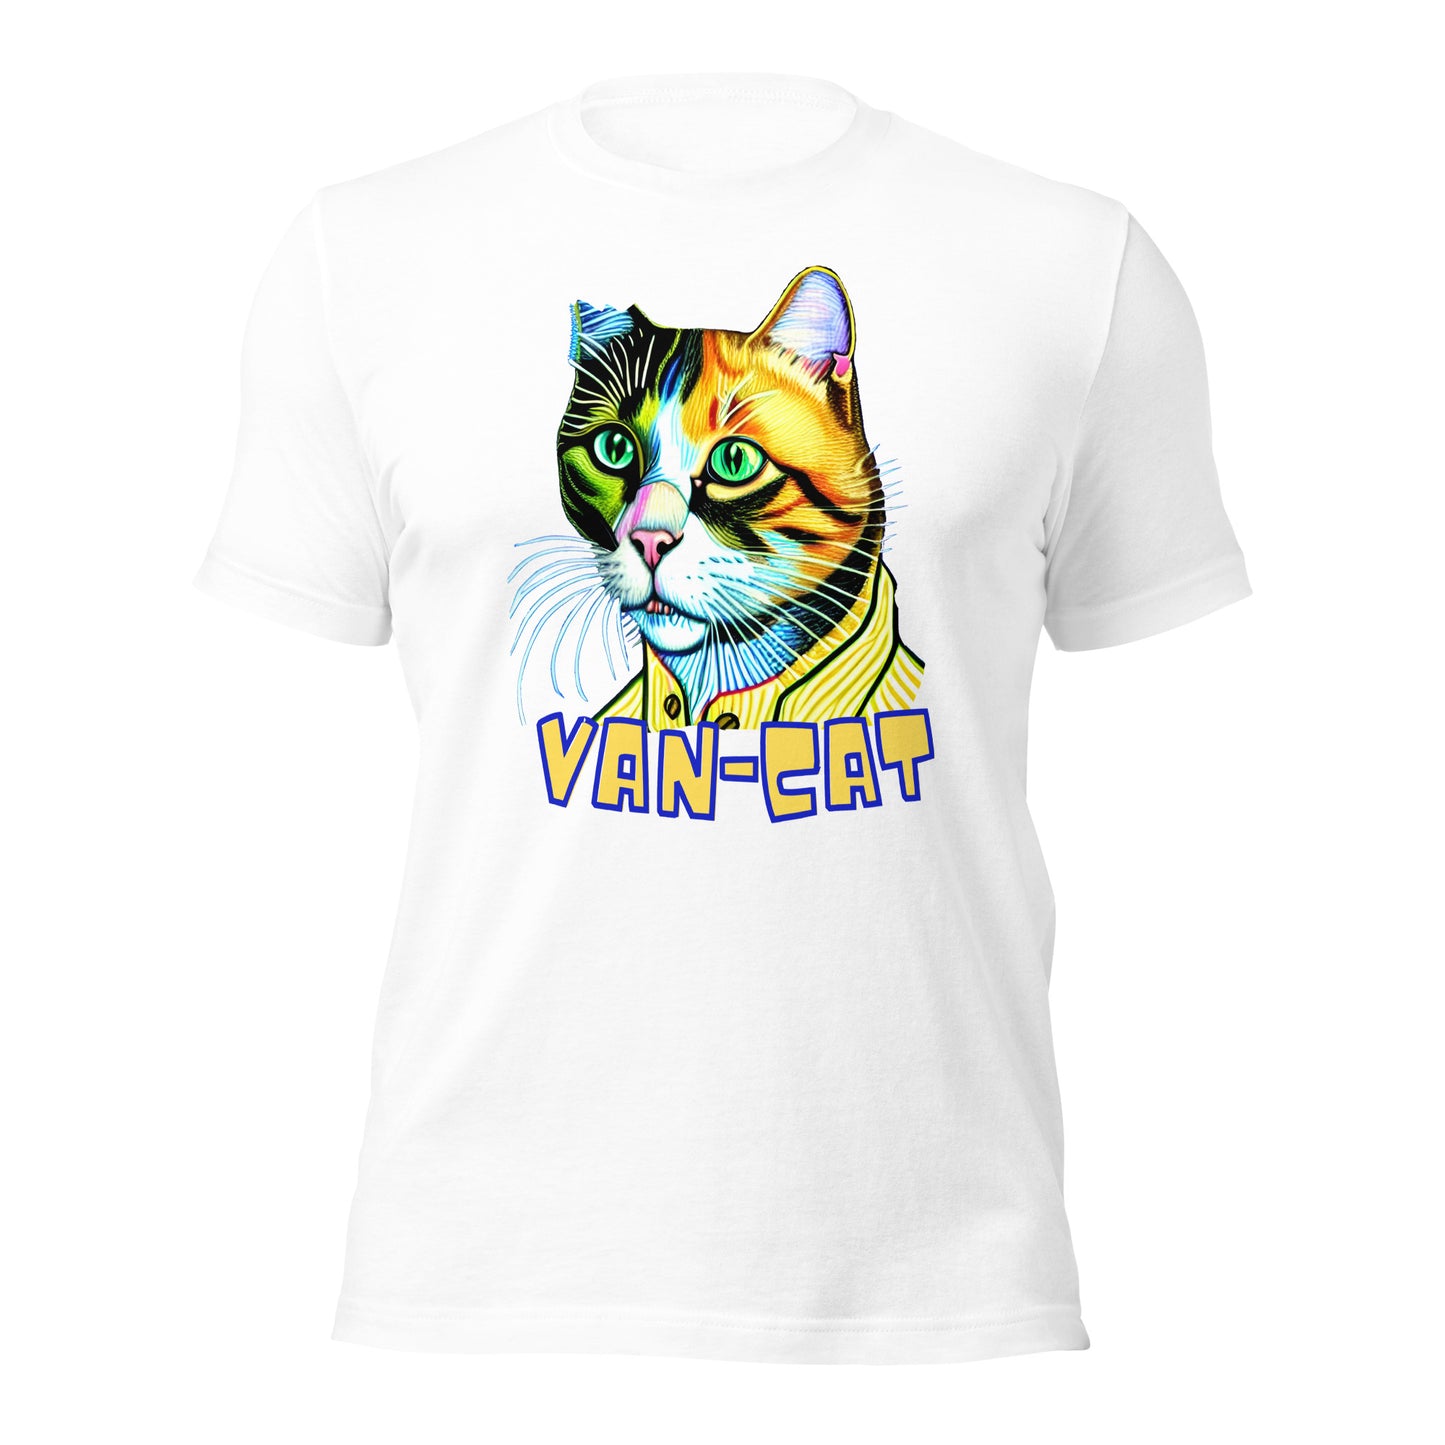 Van Cat T-Shirt: Feline Art and Style